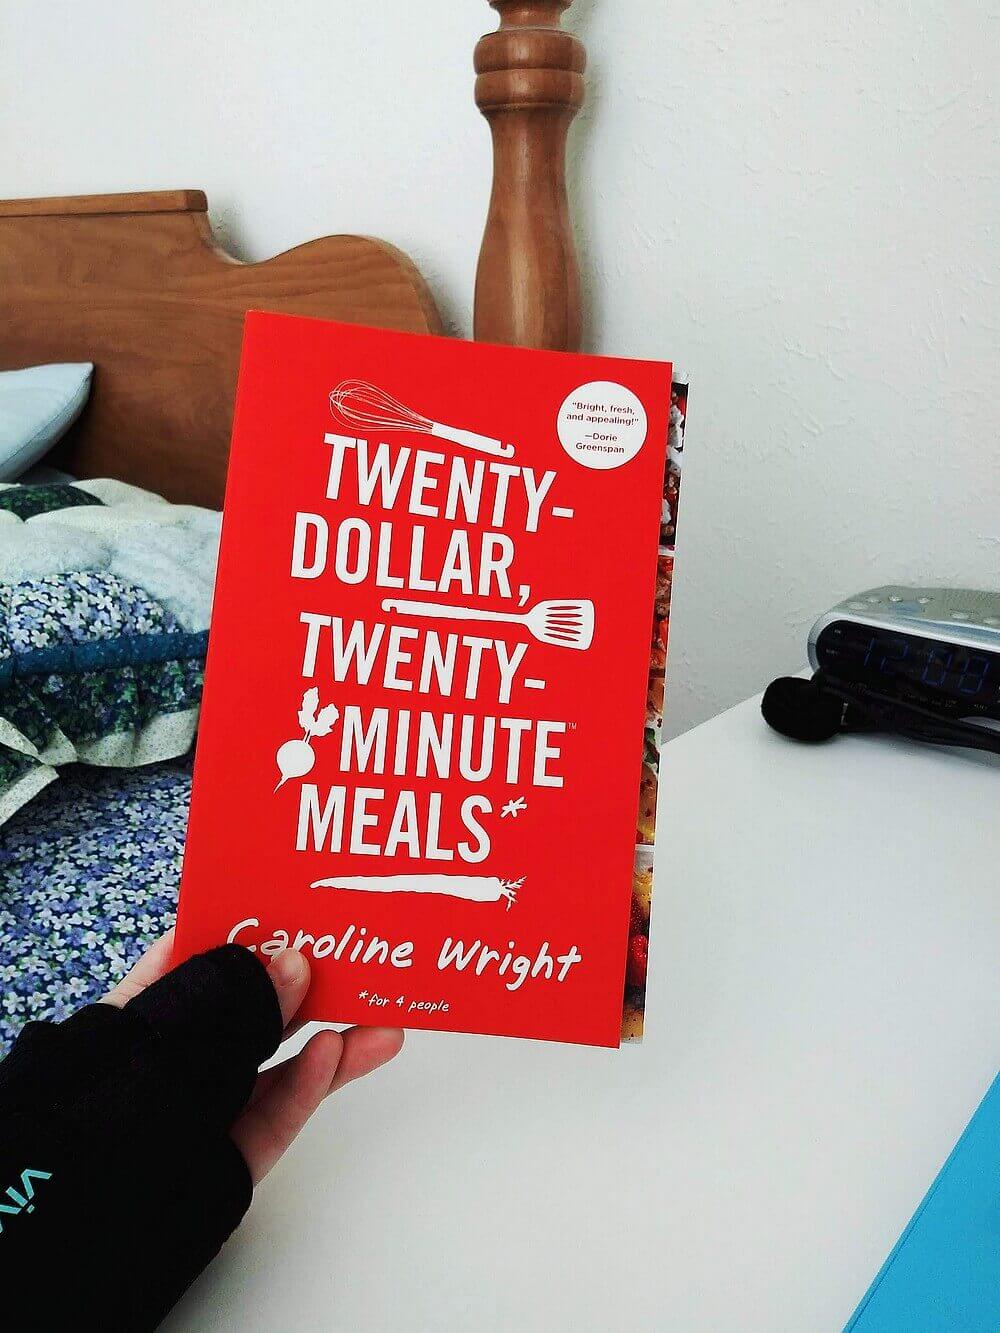 Hand, in a brace, holding "Twenty-Dollar Twenty-Minute Meals" cookbook by Caroline Wright